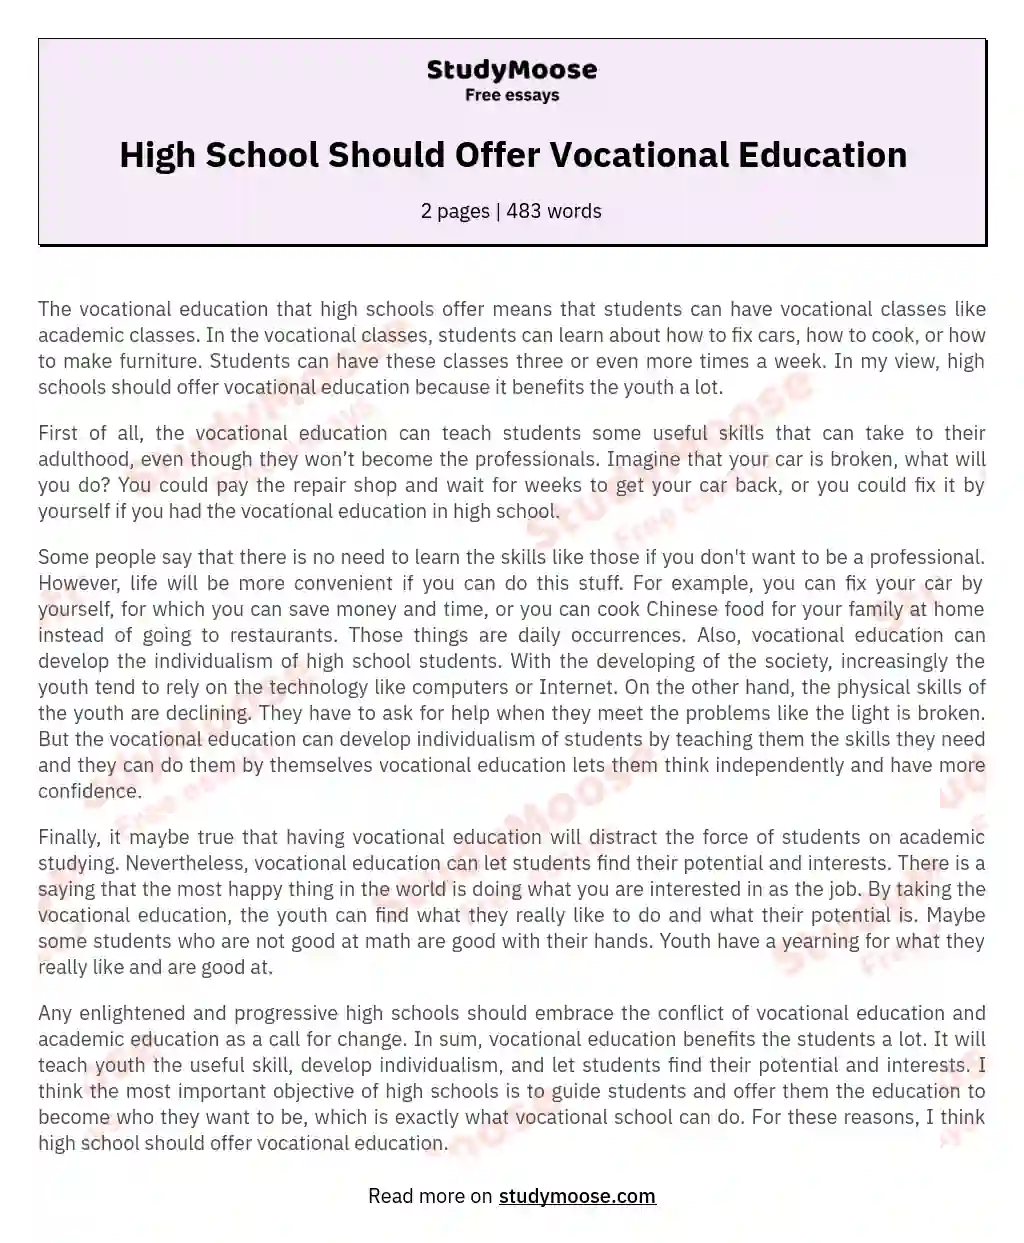 High School Should Offer Vocational Education